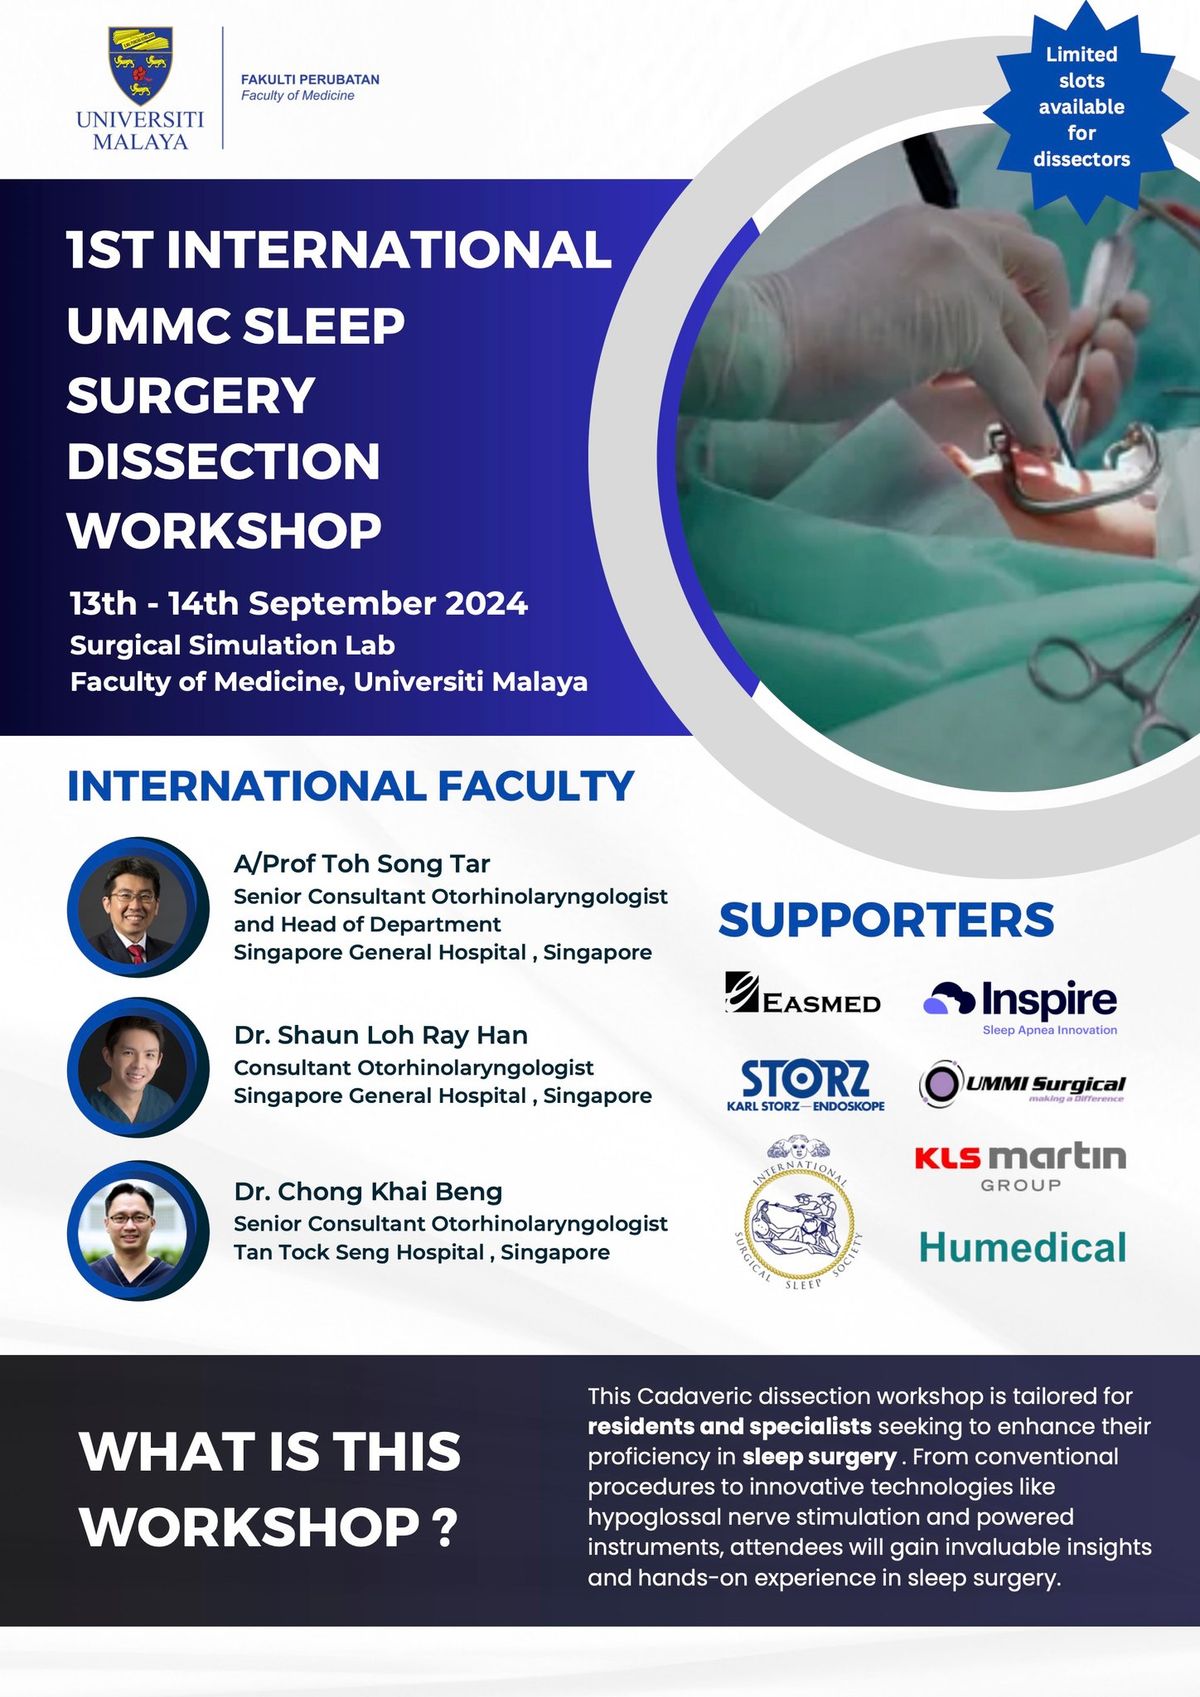 1st International UMMC Sleep Dissection Workshop